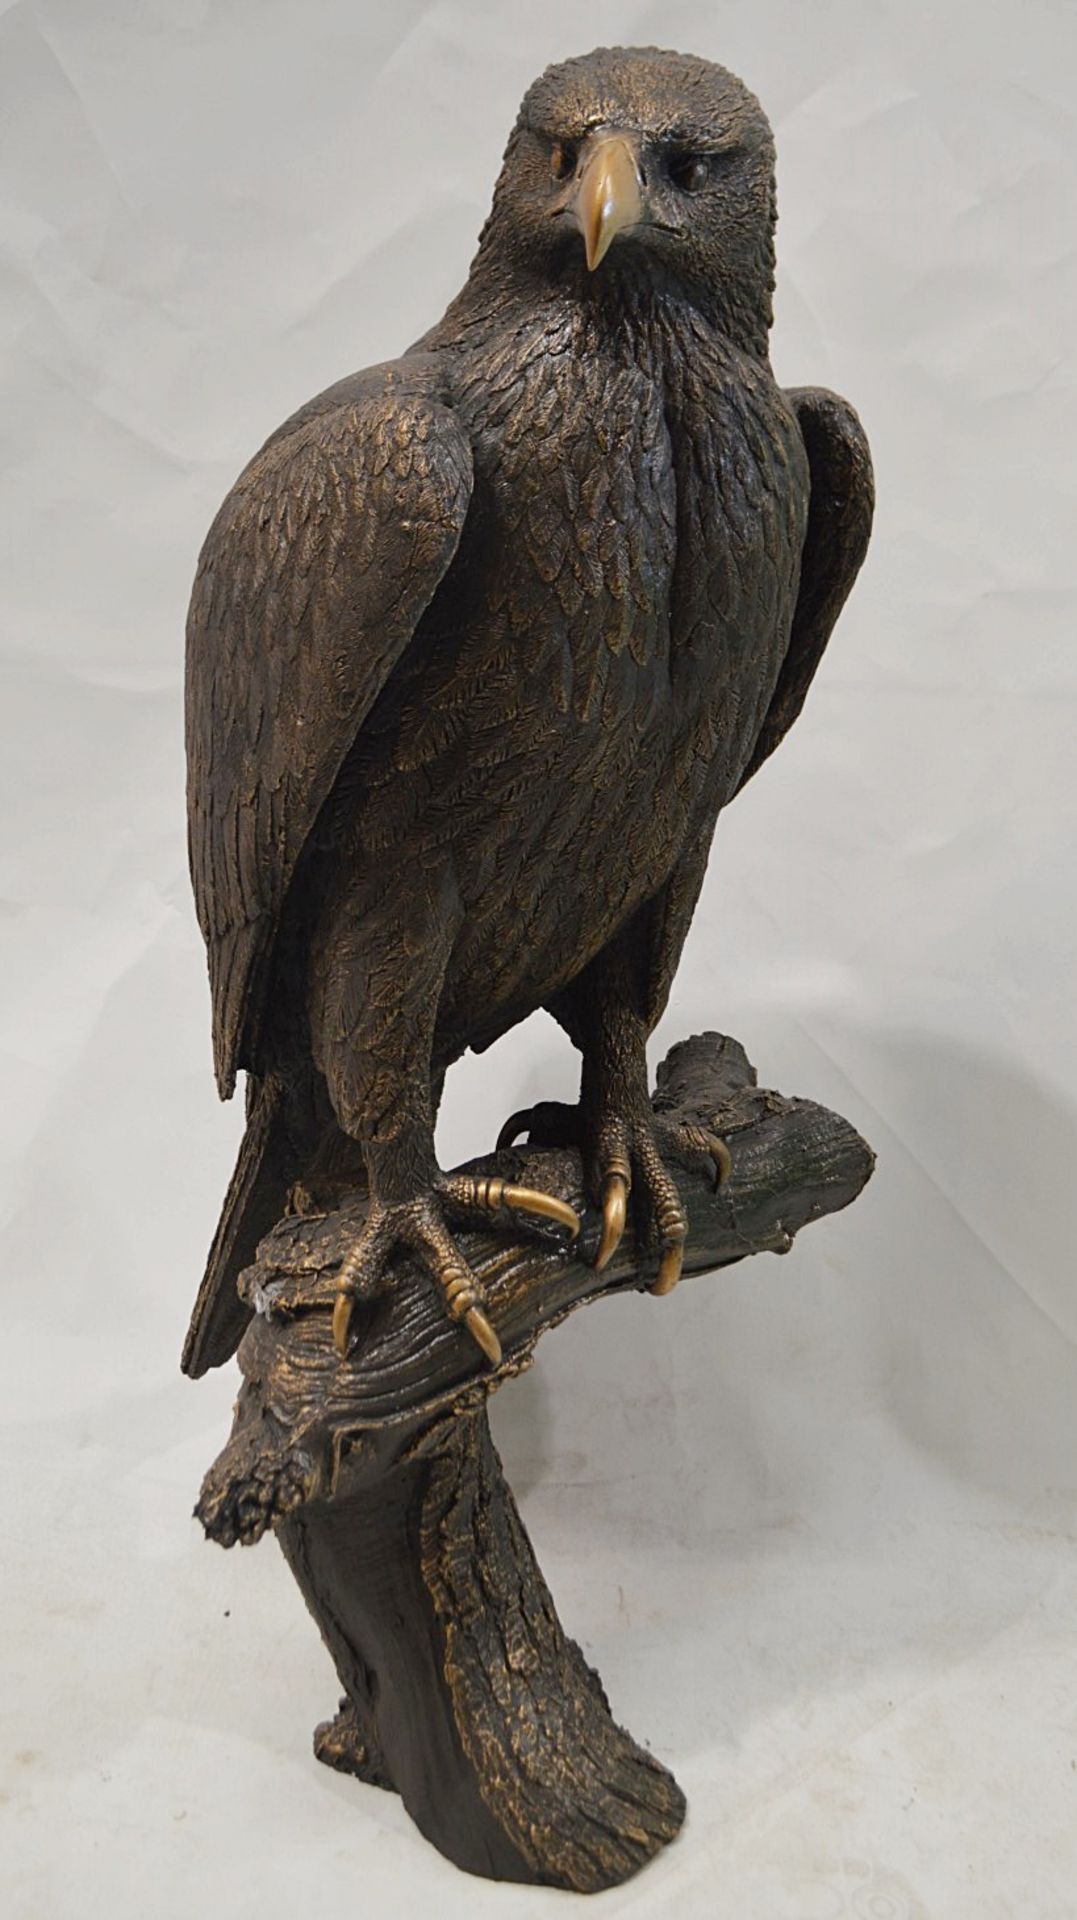 1 x Stefano Ricci Ornamental 1-Metre Tall Eagle Statue - Unique And Beautiful Designer Display Piece - Image 3 of 5